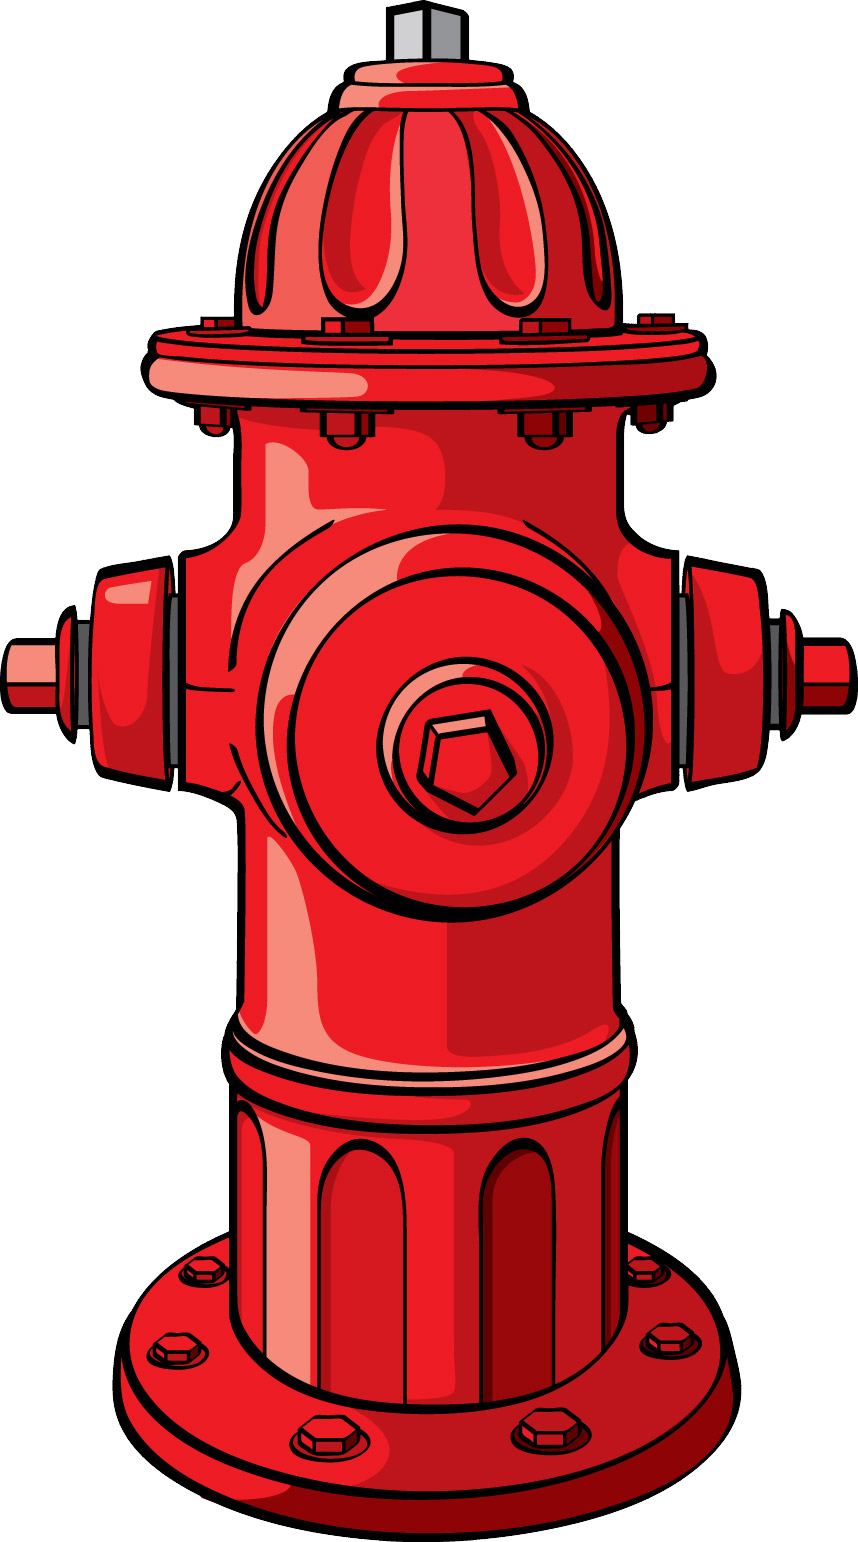 Feuerhydrant